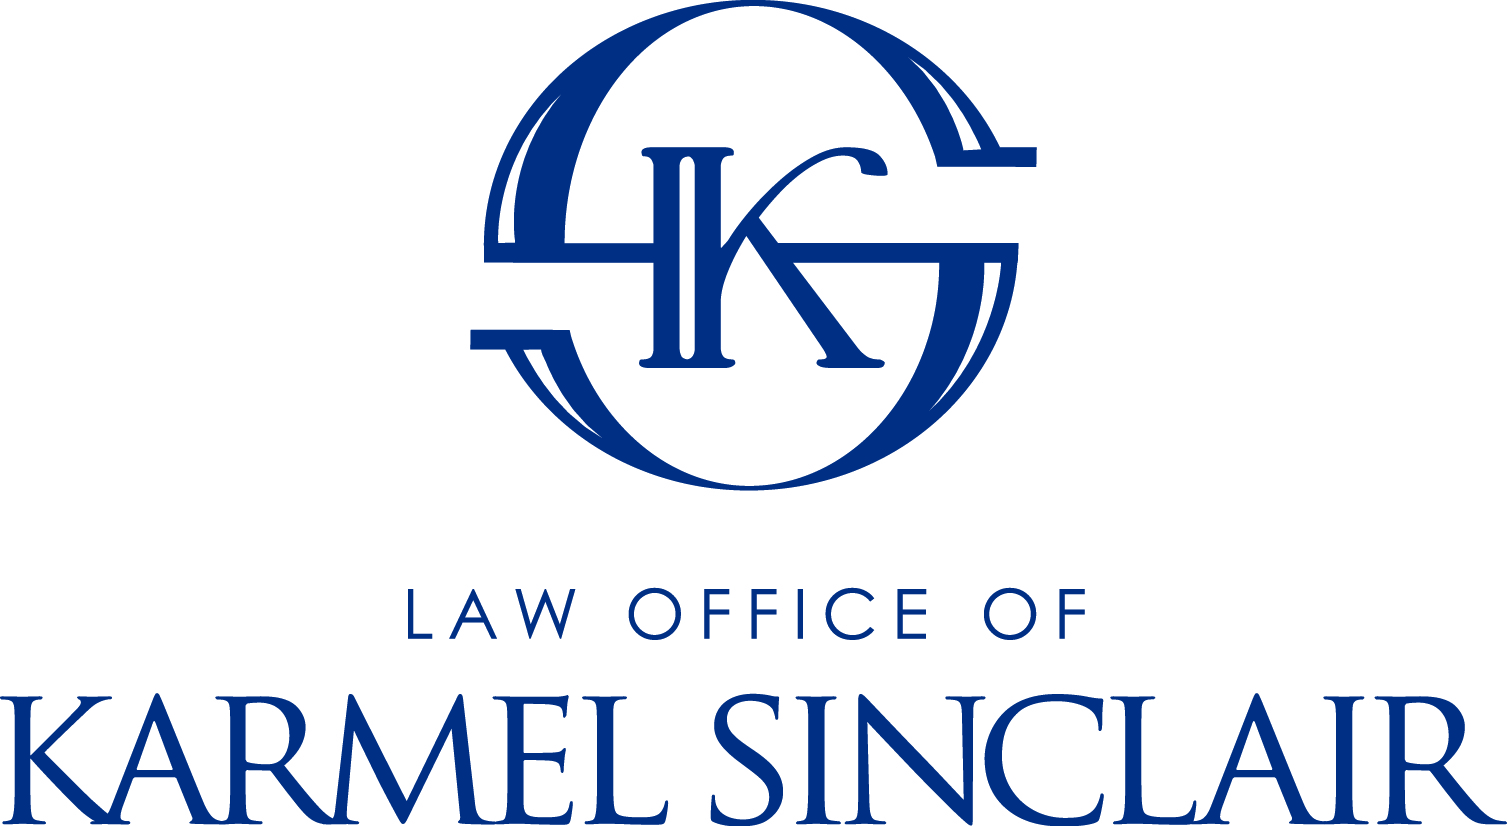 Family Law Office Of Karmel Sinclair - logo